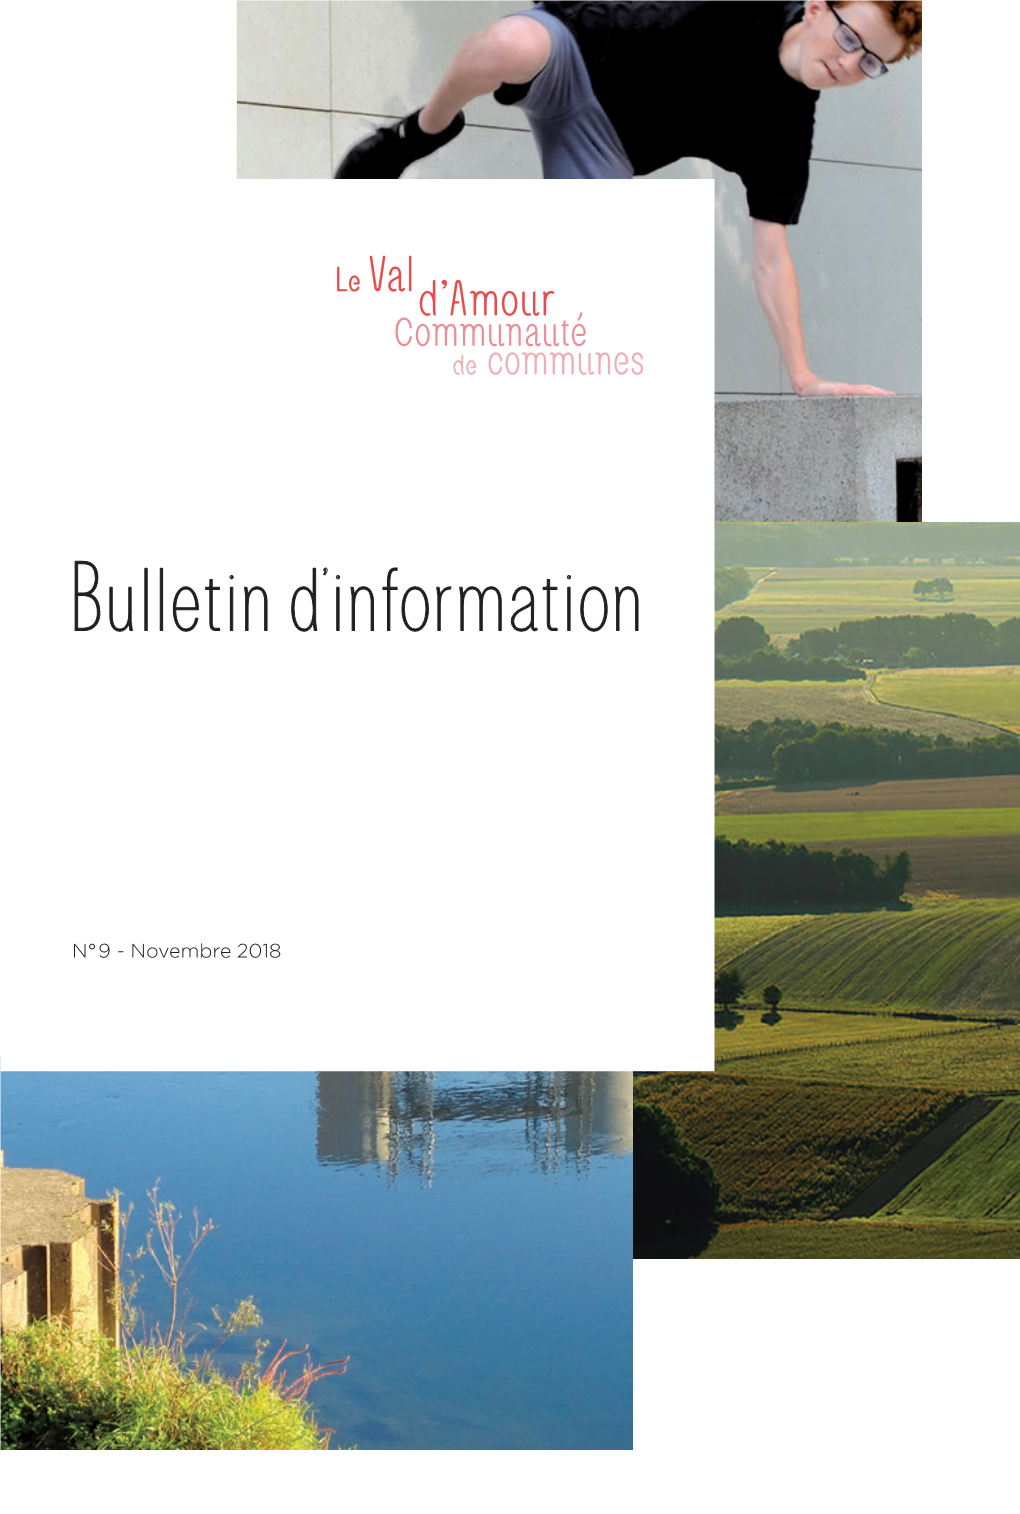 Bulletin D'information